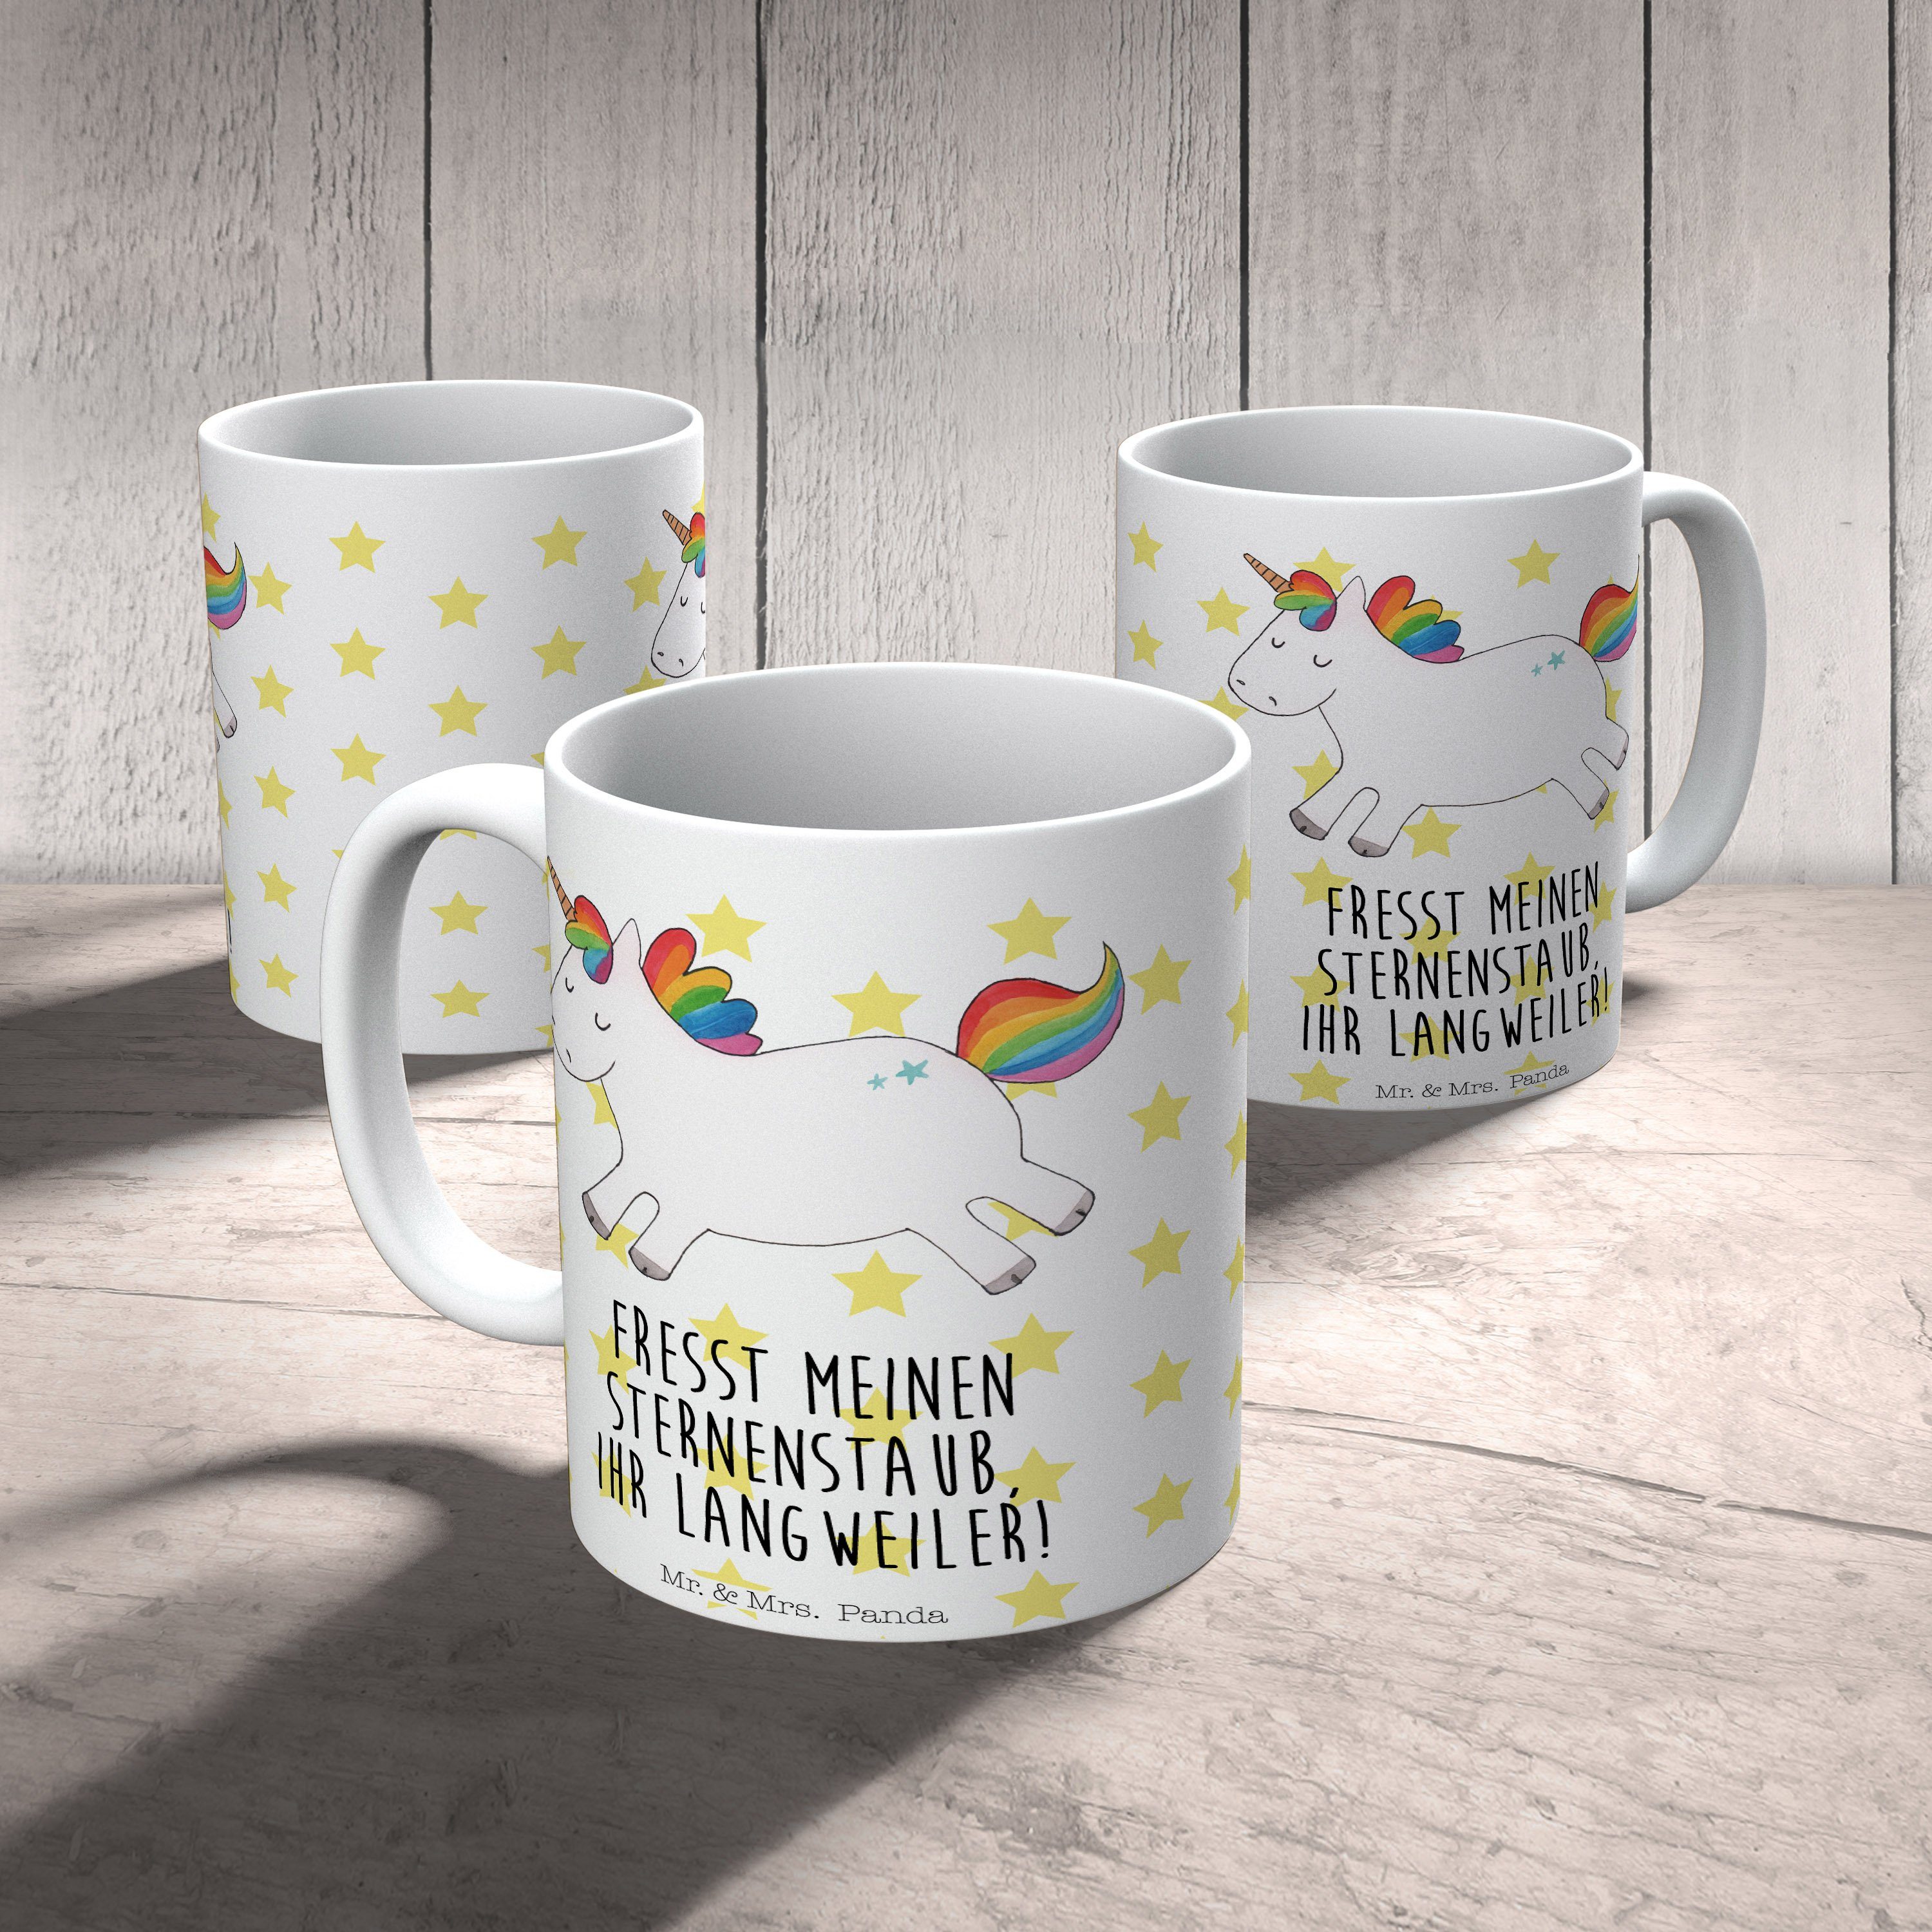 Mr. & Mrs. Panda Mariella Geschenk, Porzellantasse, Teetasse, Tas, Büro - Keramik Tasse Kaffeebecher